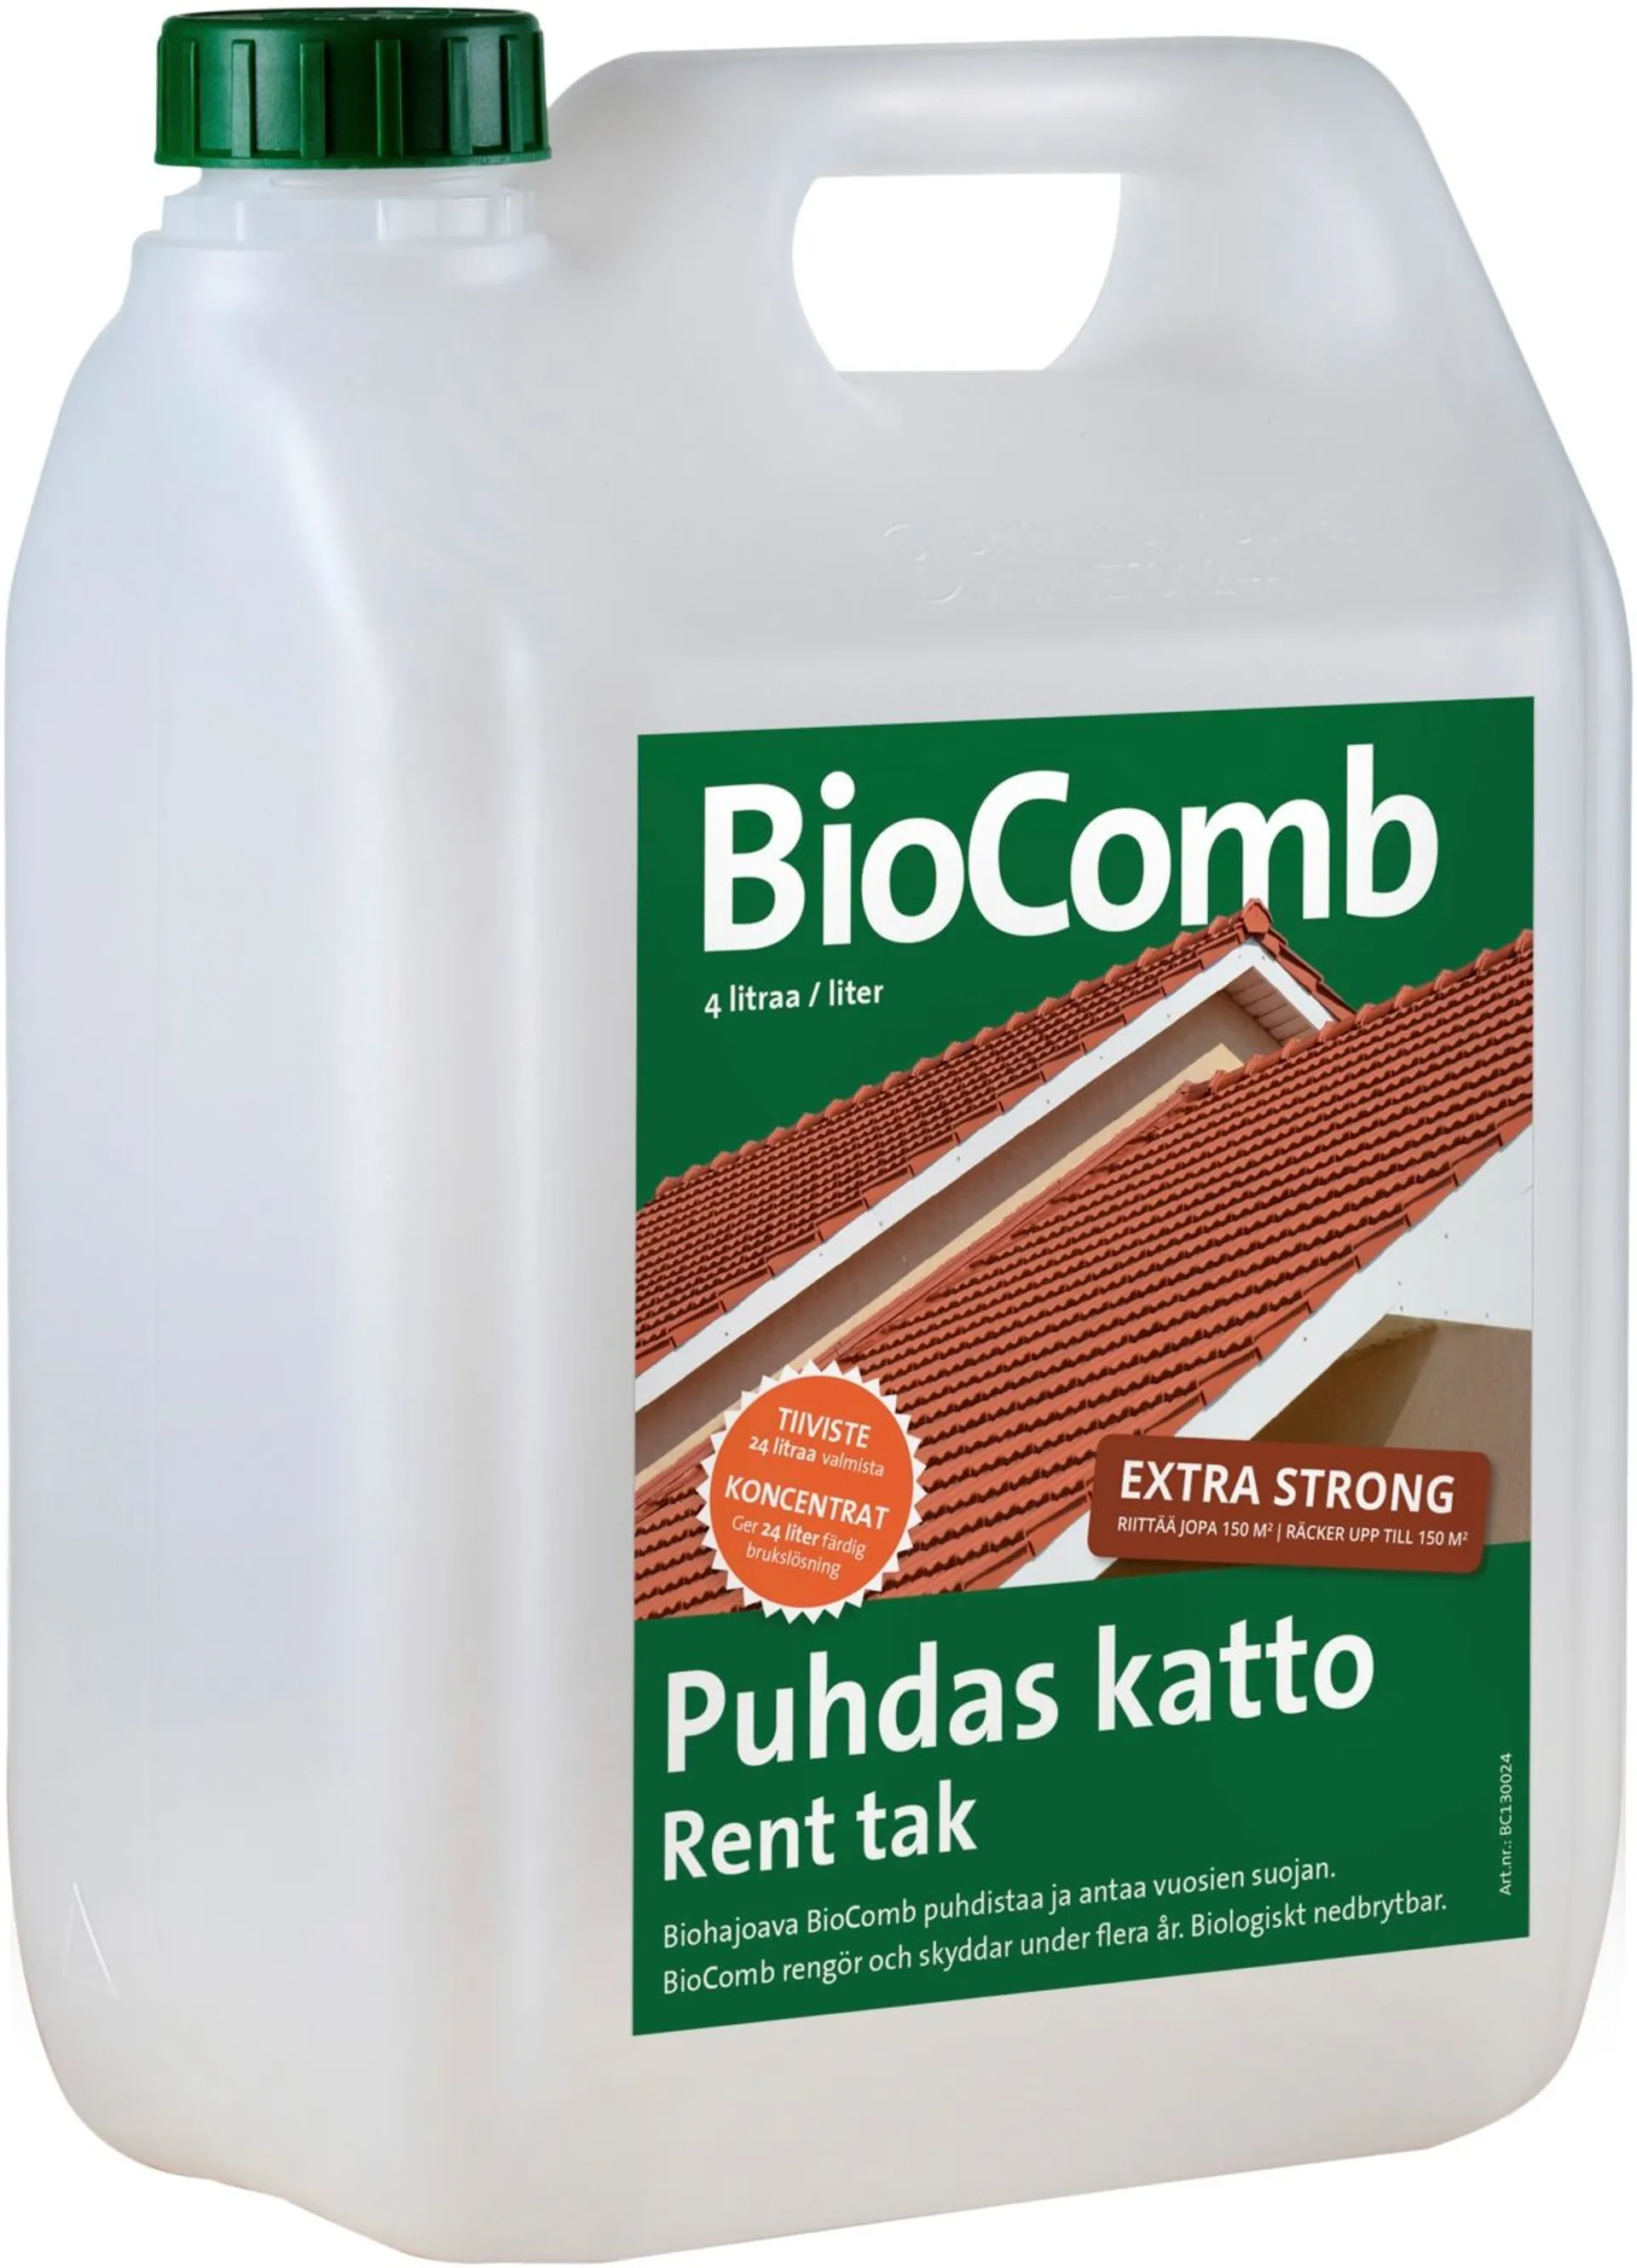 Biocomb Puhdas katto extra strong 4 l